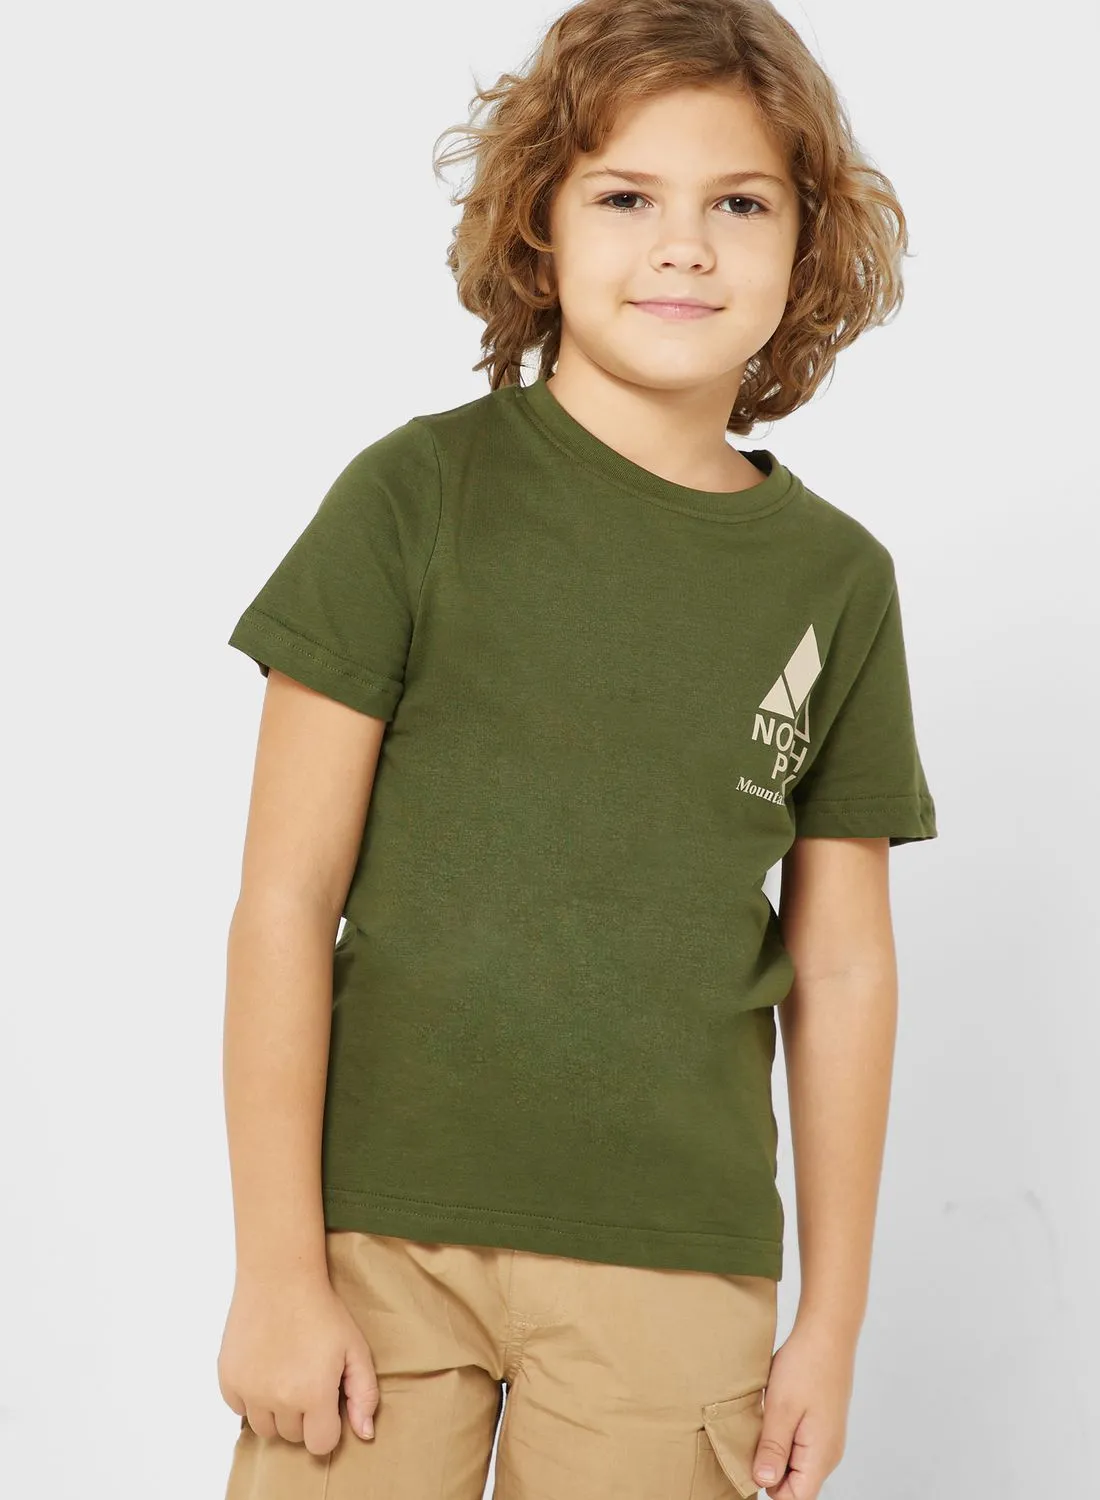 Pinata Front And Back Printed T-Shirt For Boys